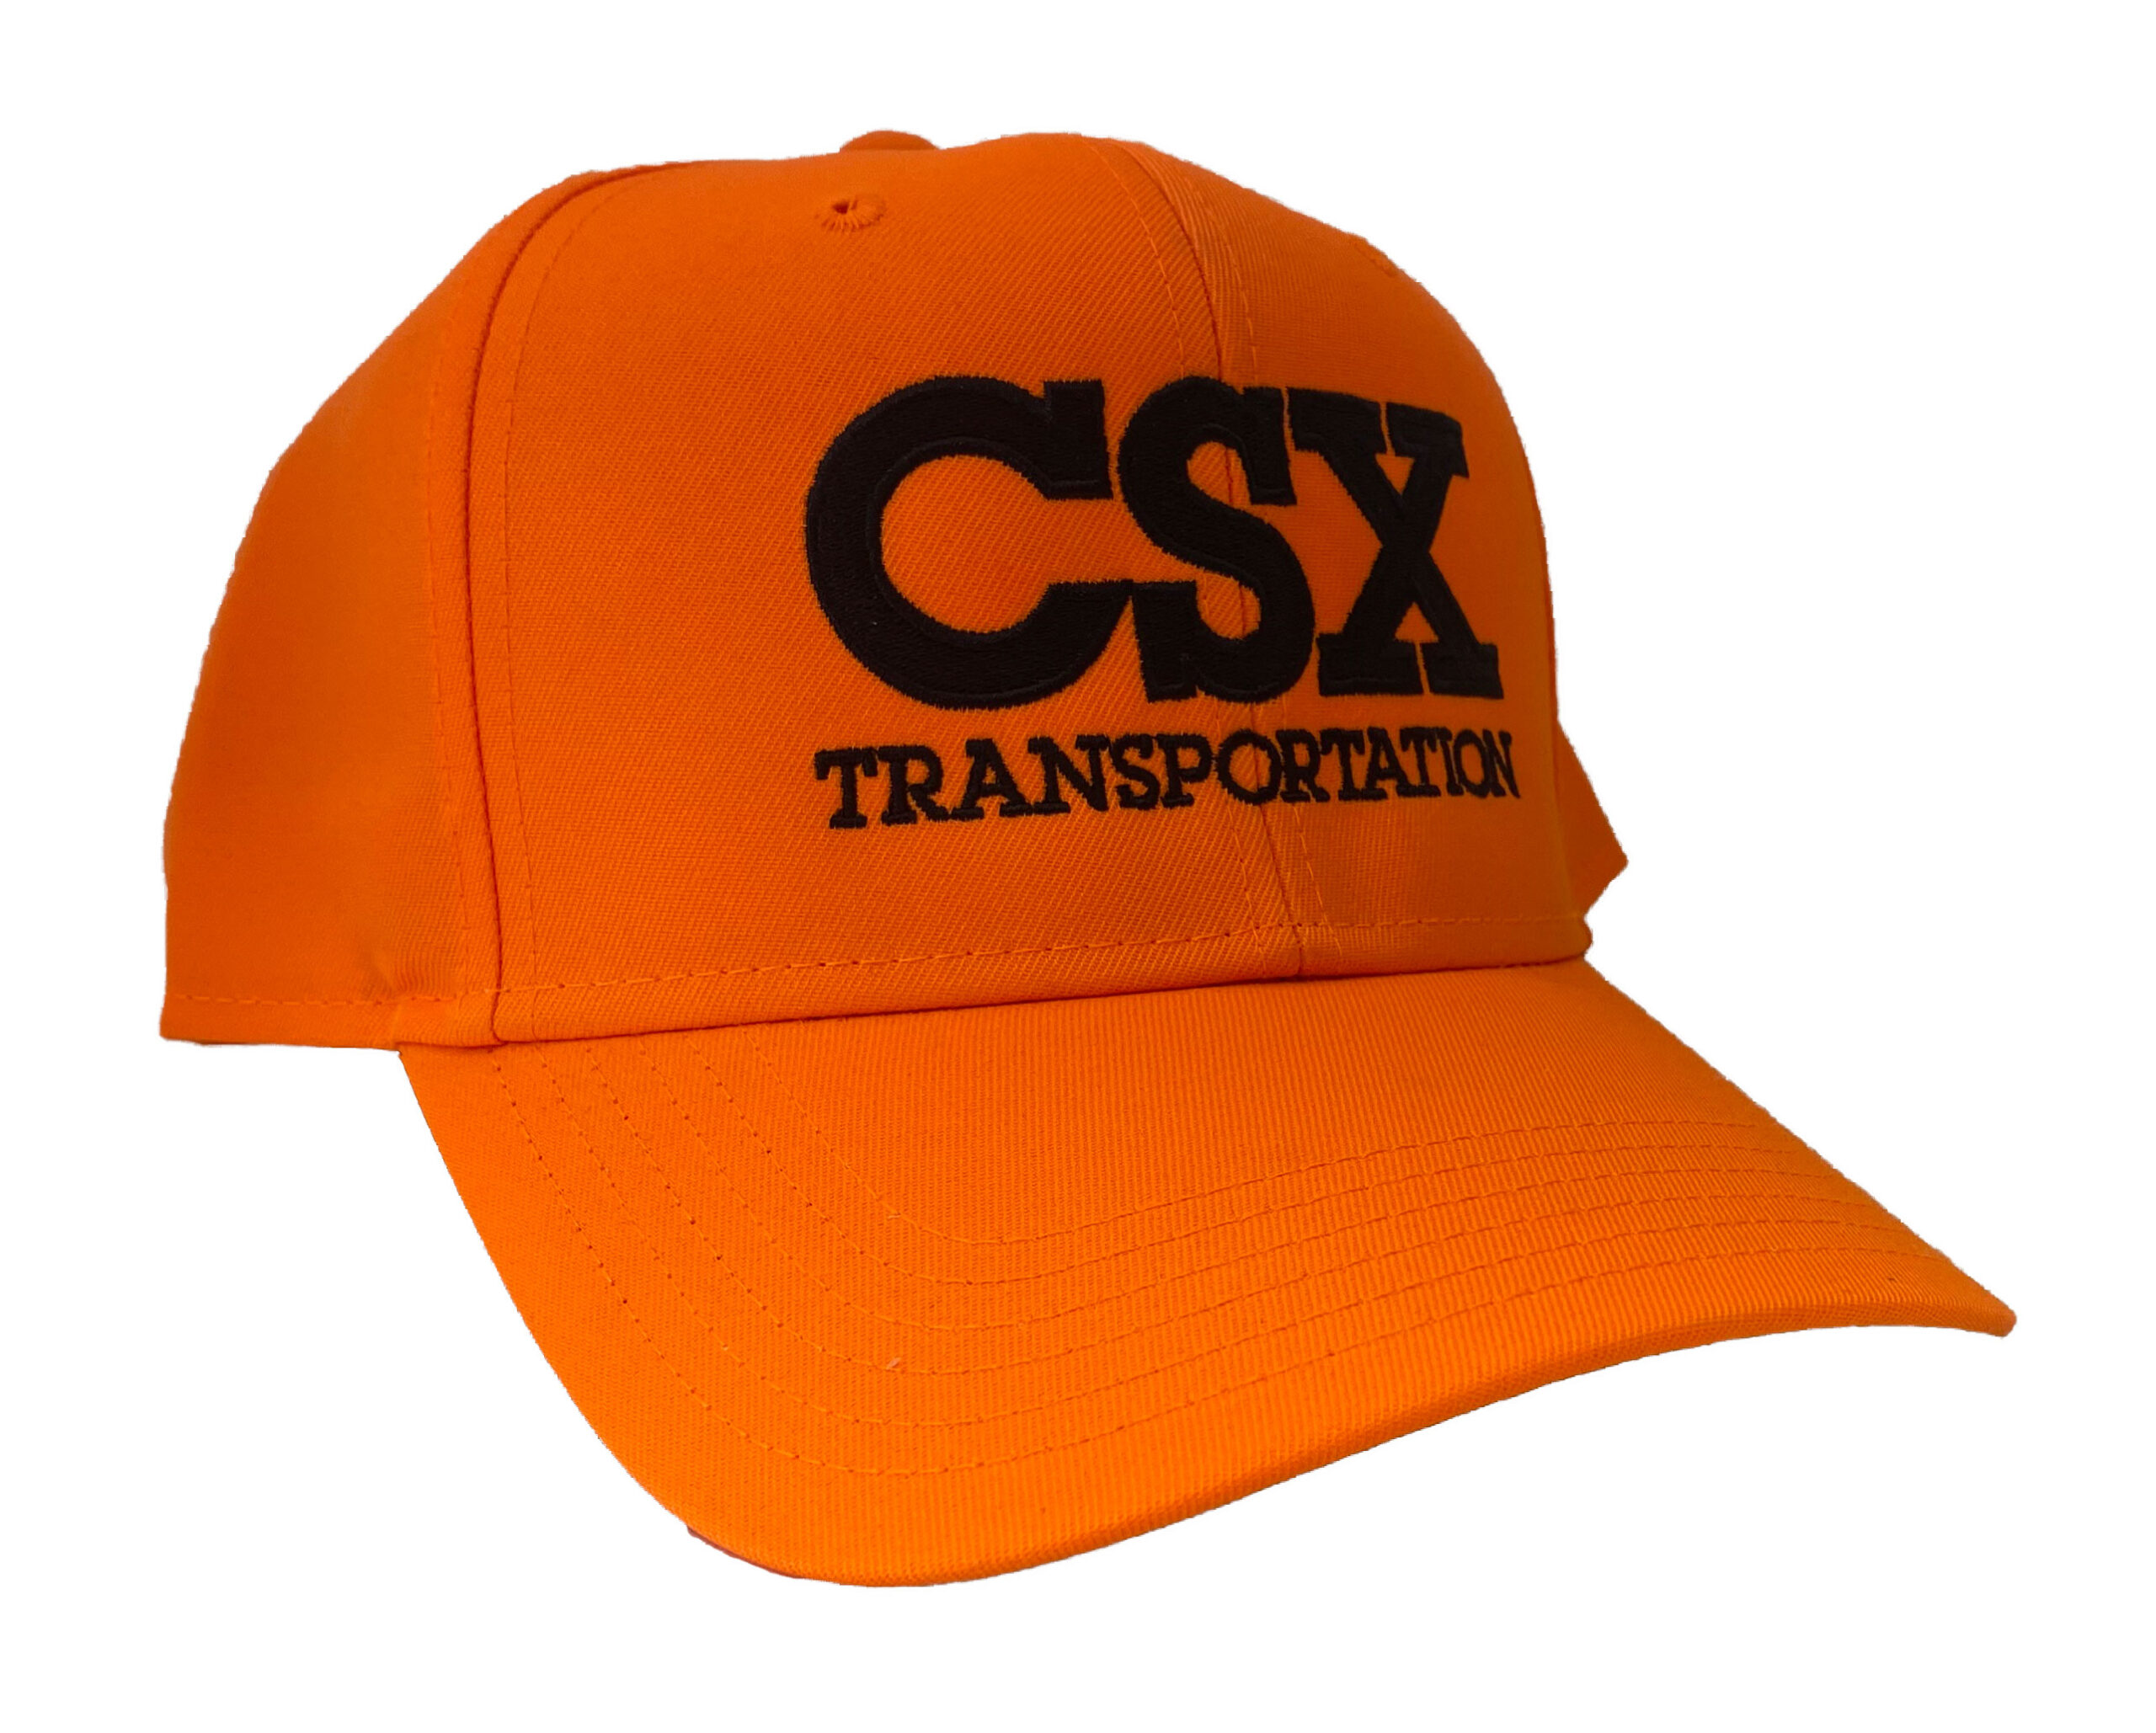 CSX Transportation Railroad Embroidered Neon Orange Cap Hat #40-3022O